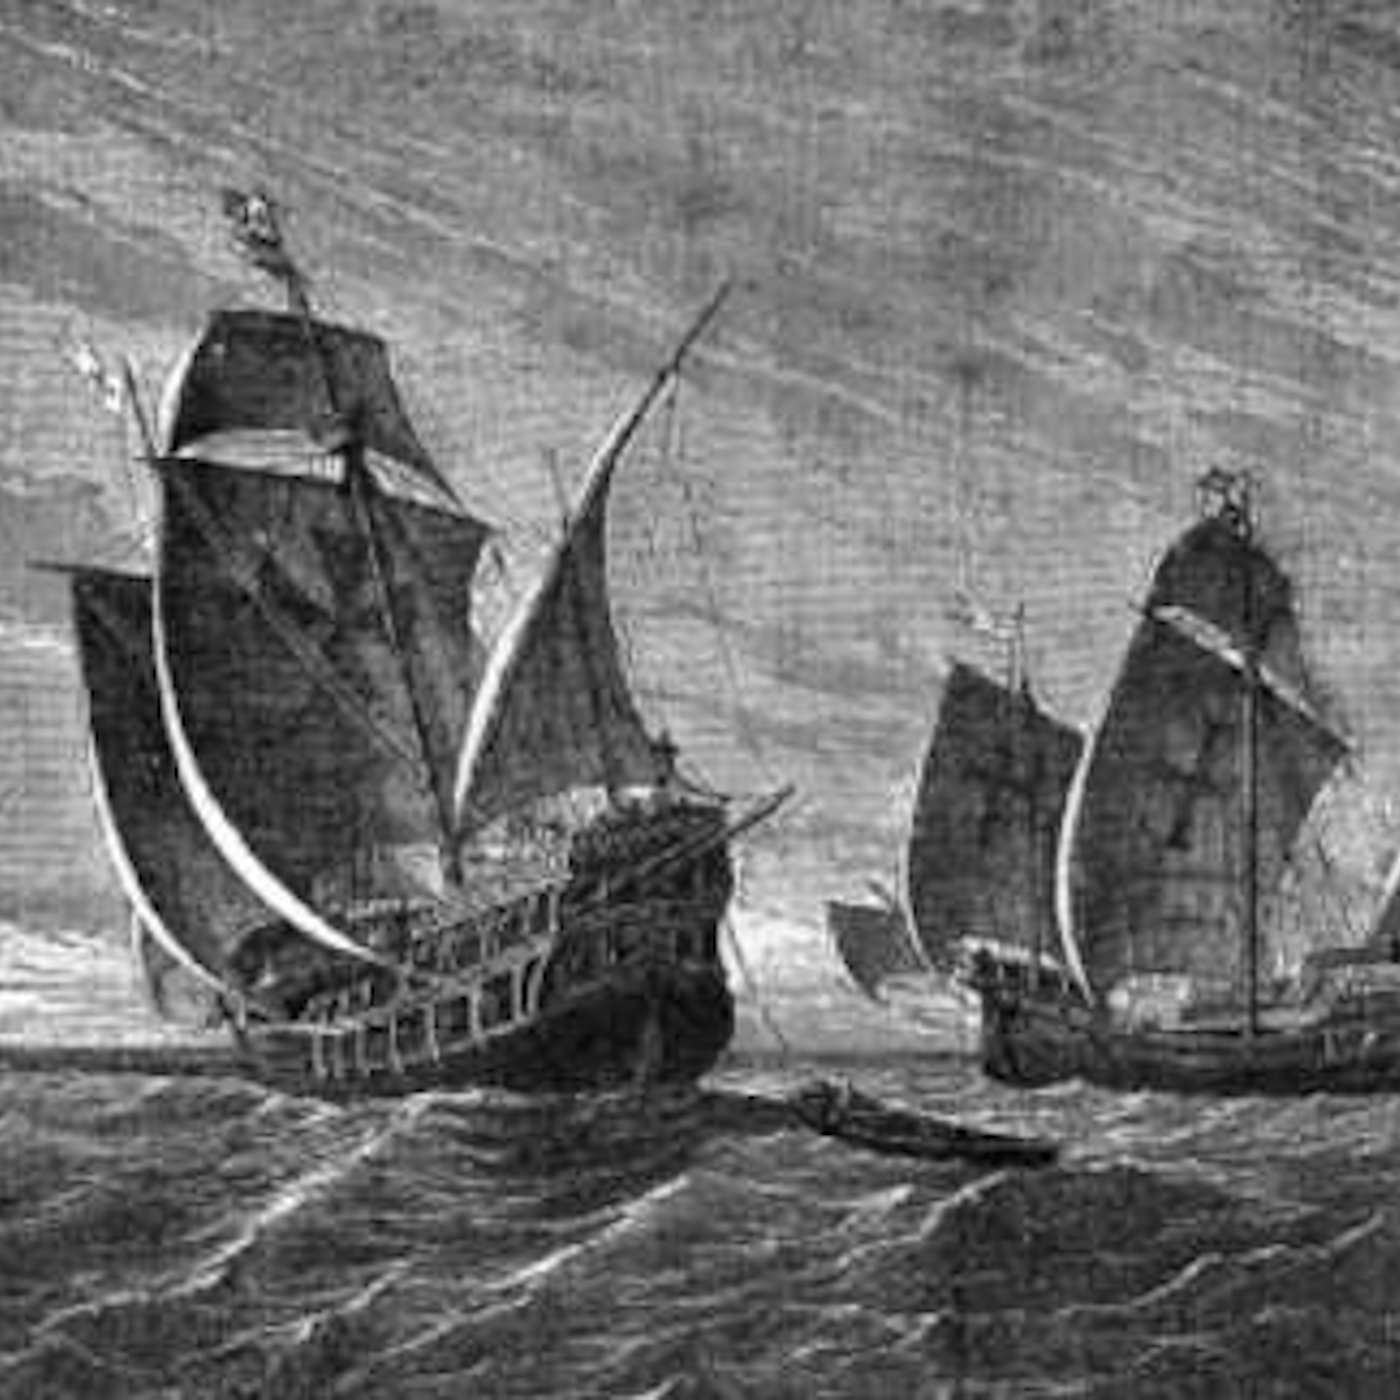 Les navires de Christophe Colomb. Gustav Adolf Karl Closs. Domaine publique.